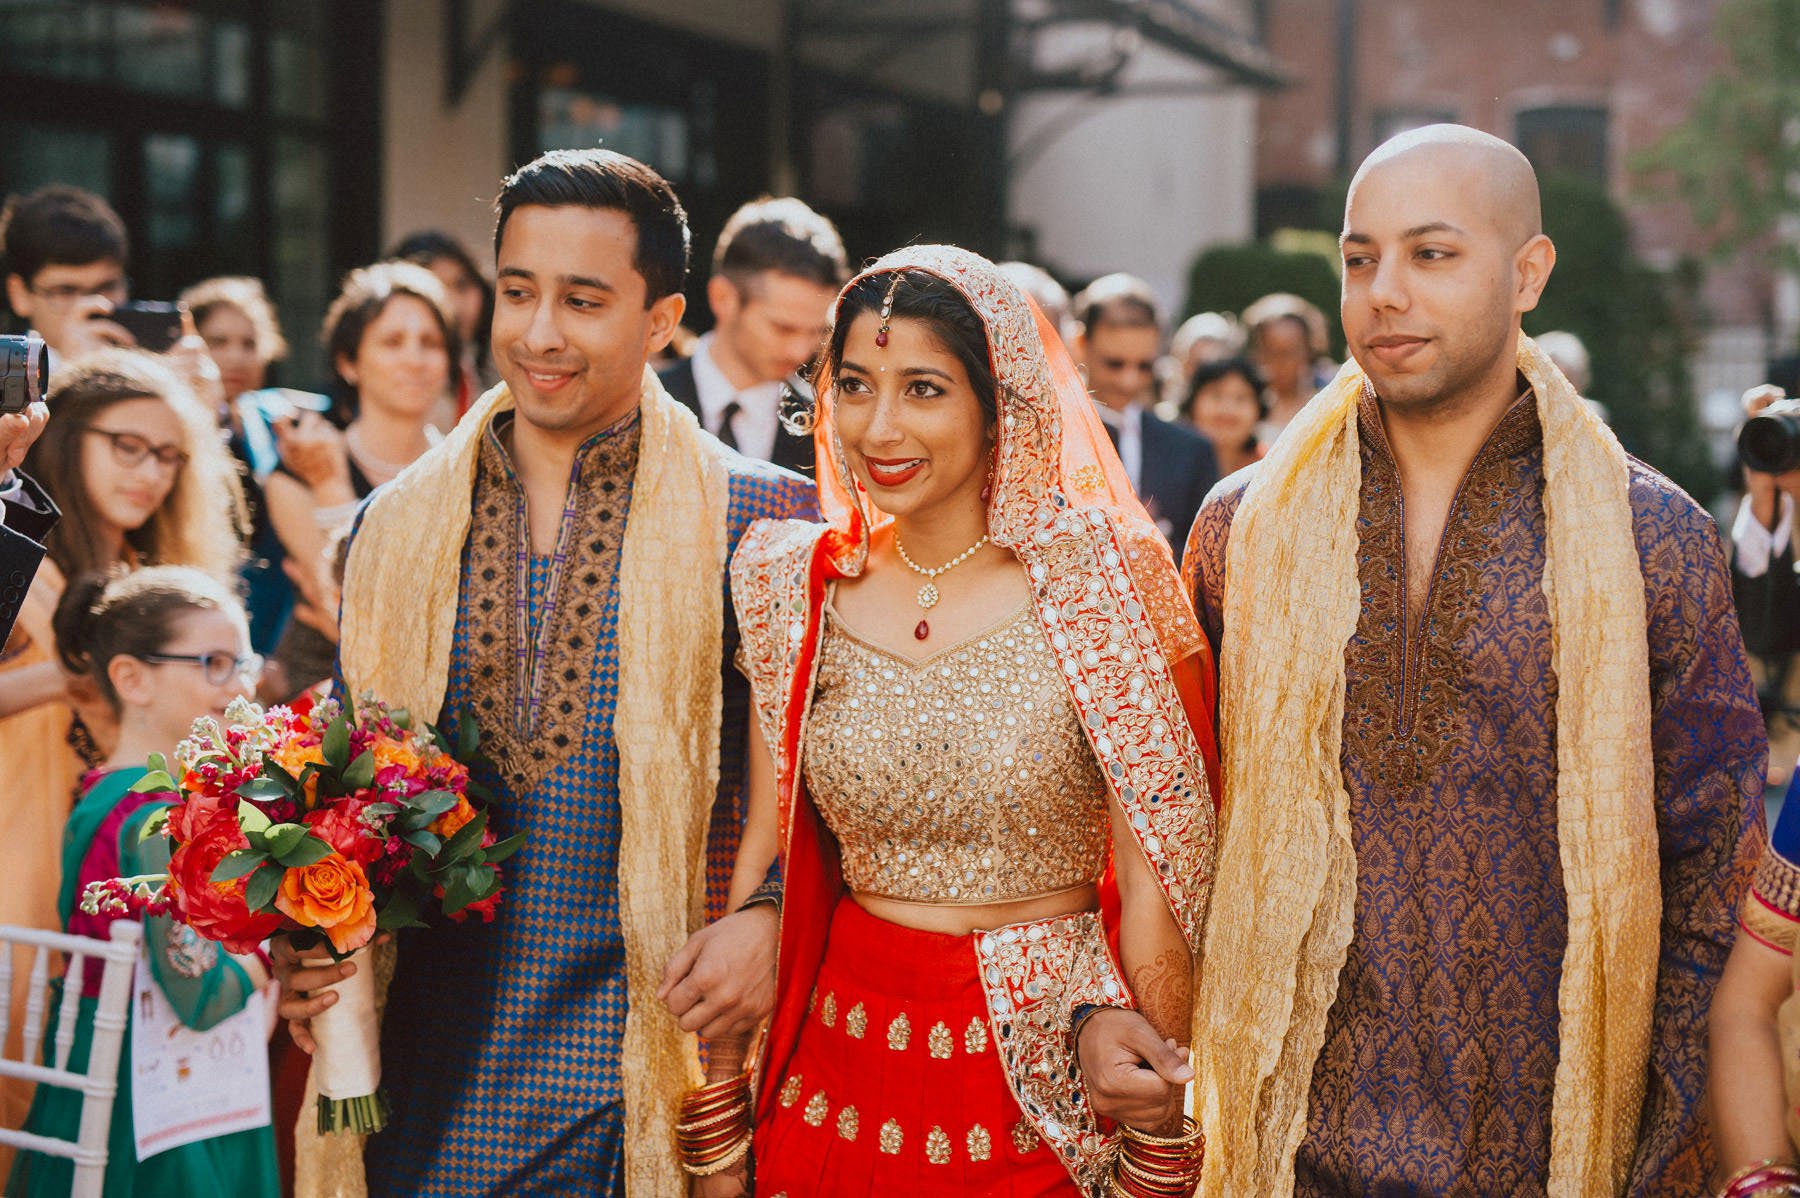 vie-philadelphia-indian-wedding-75.jpg